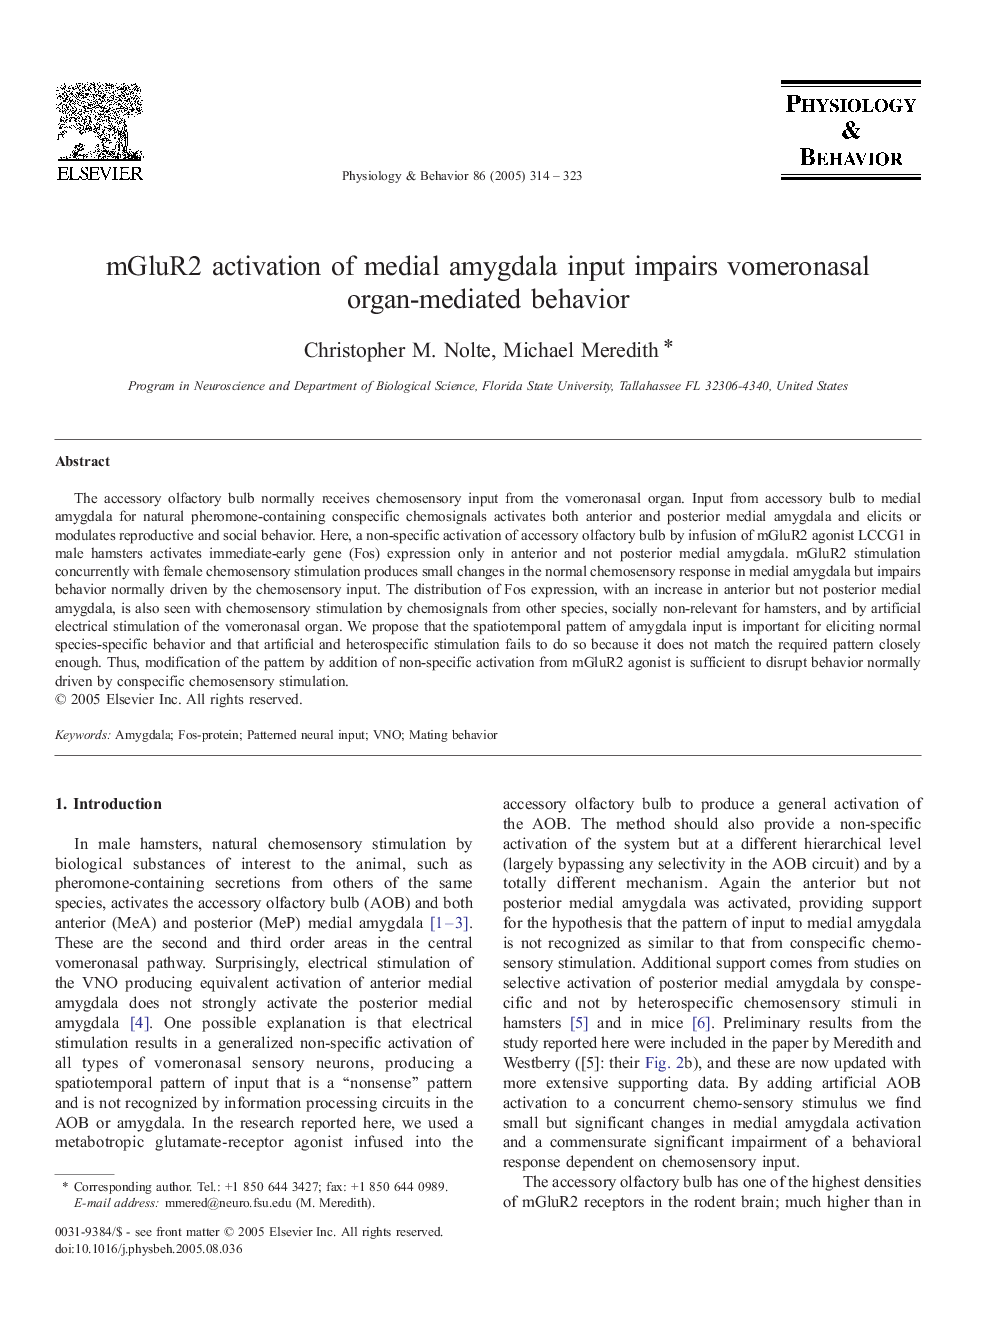 mGluR2 activation of medial amygdala input impairs vomeronasal organ-mediated behavior